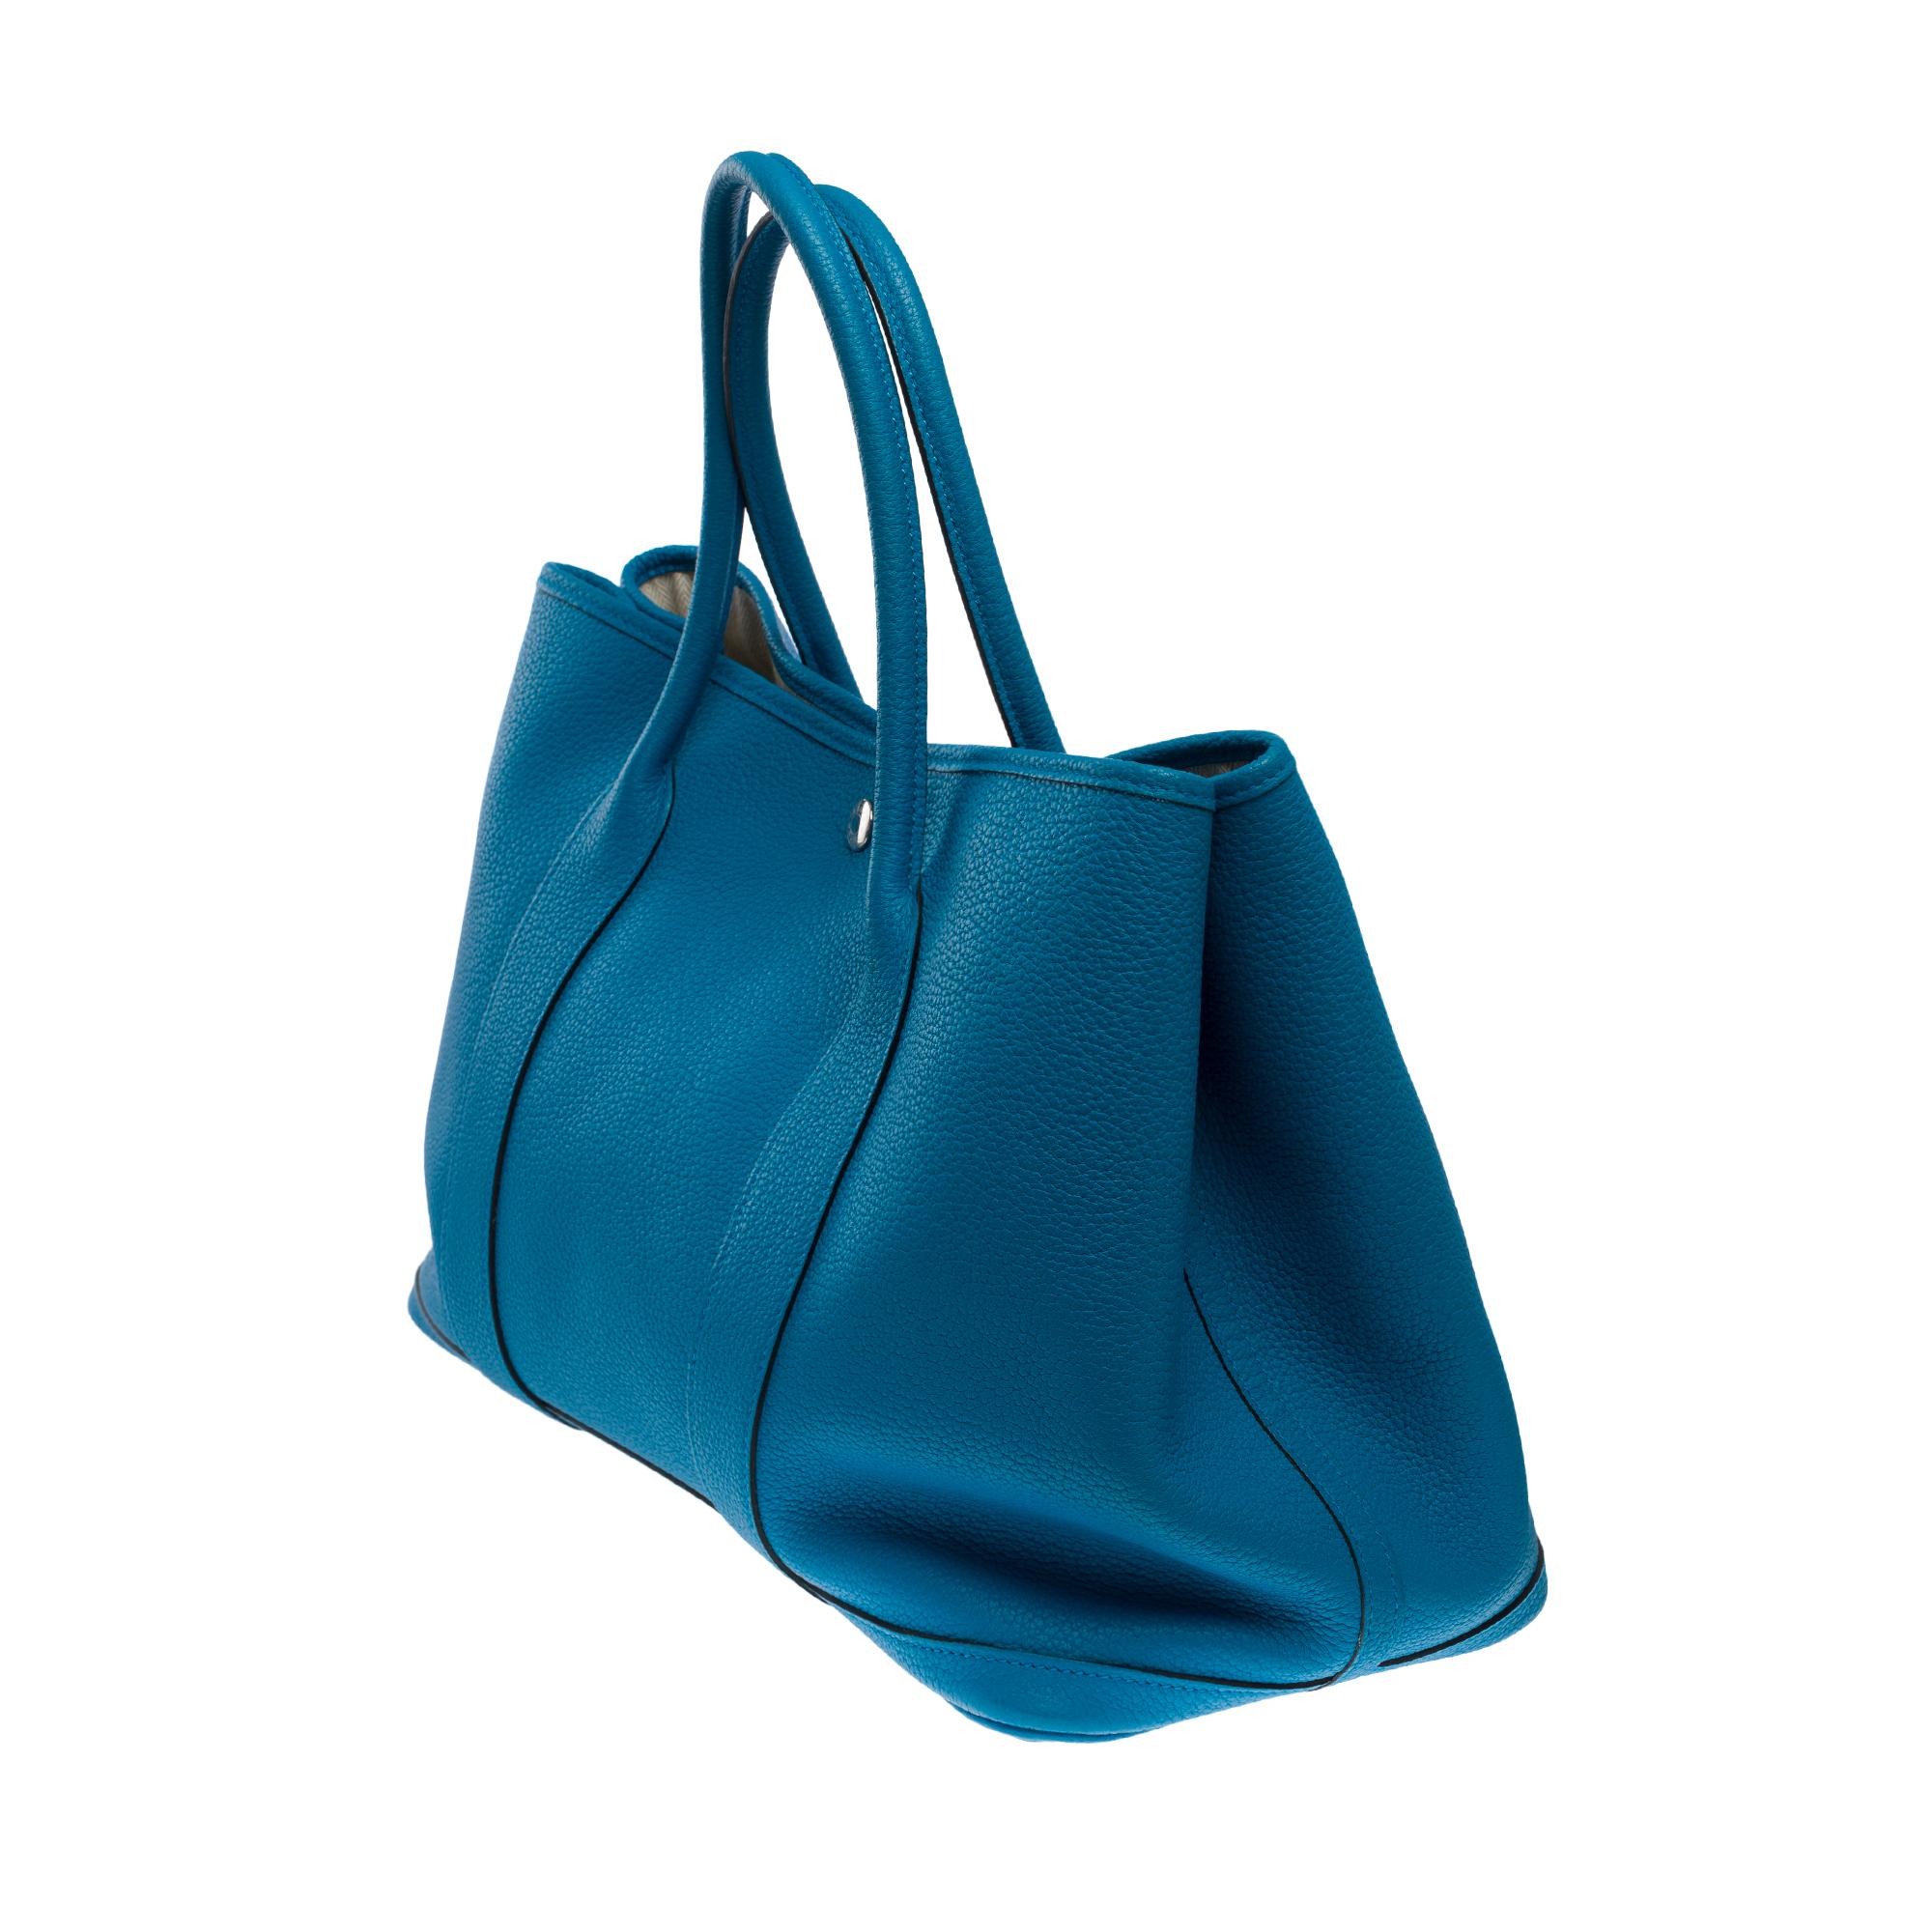 Gorgeous Hermès Garden Party 36 Tote bag in Blue Zanzibar Negonda leather, SHW 1